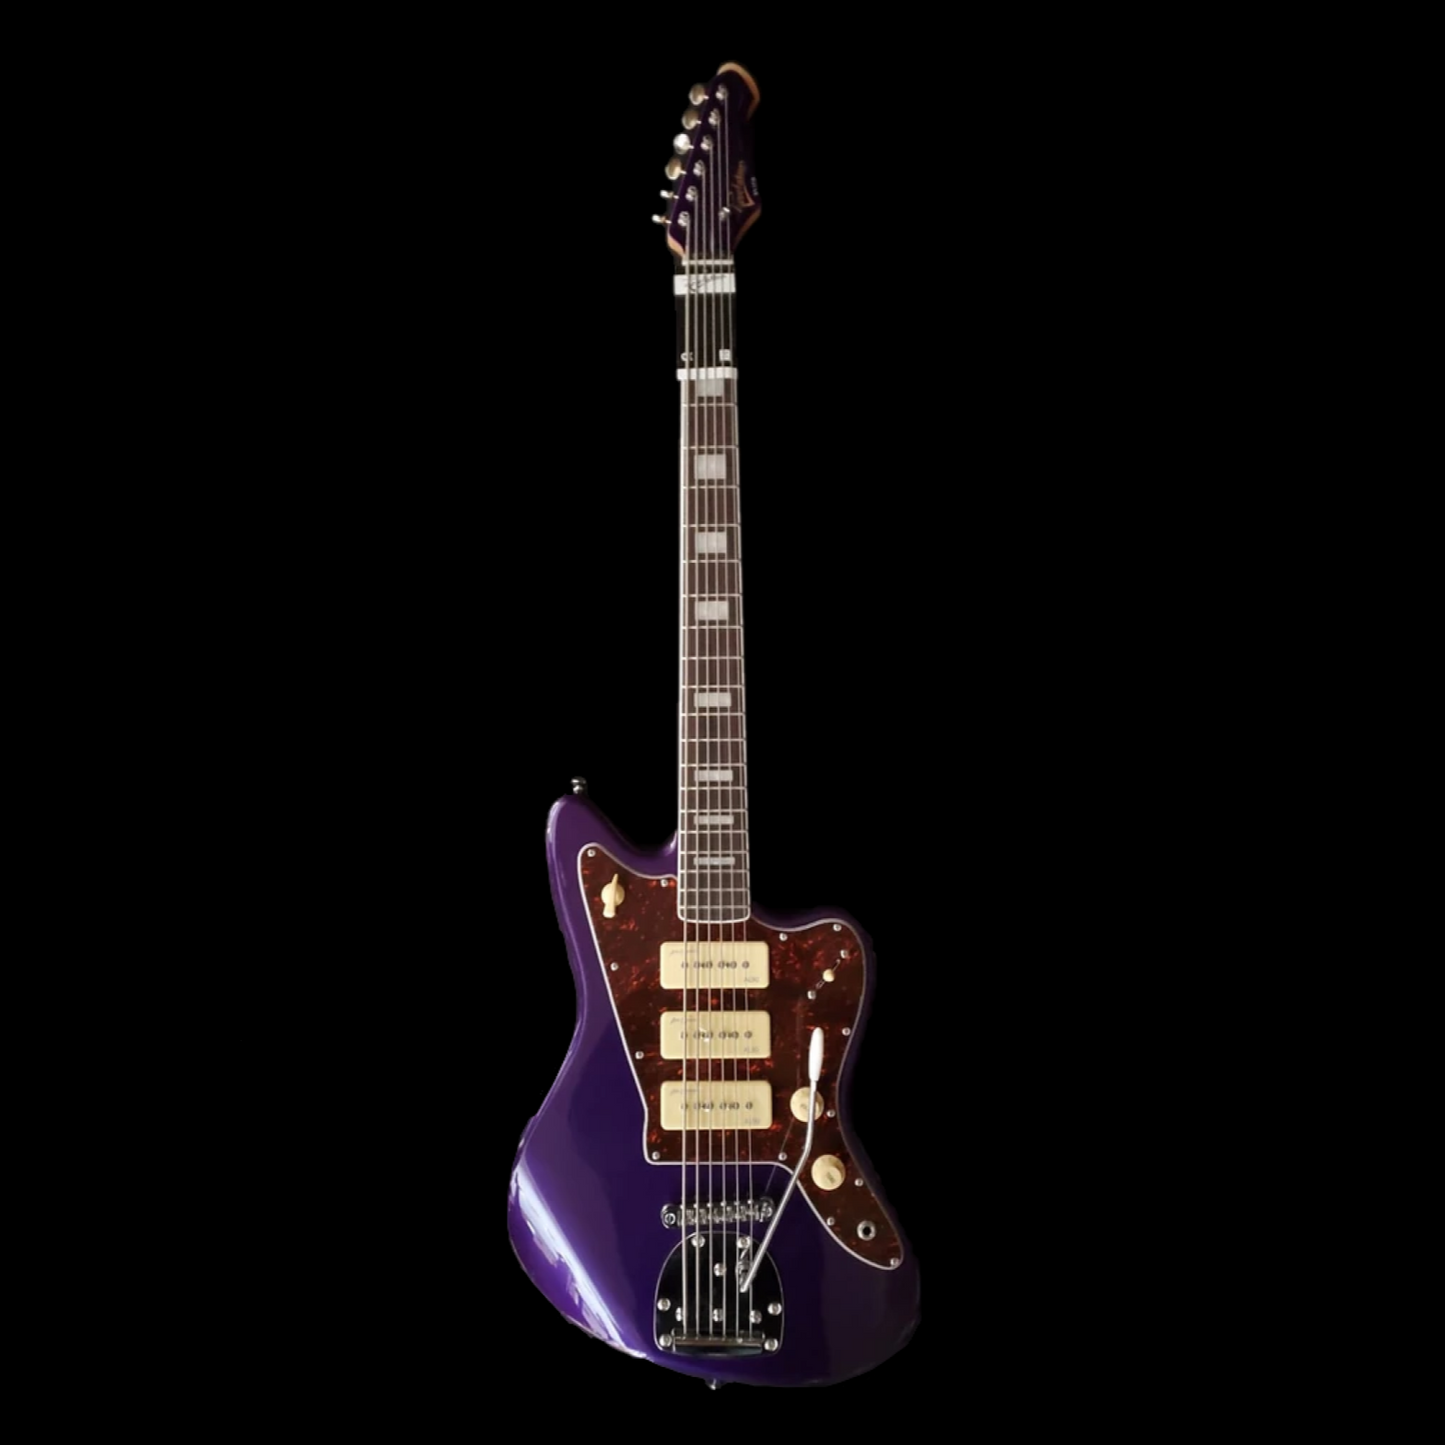 Revelation RVJTB Vibrant Purple 6 String Electric Guitar/Bass